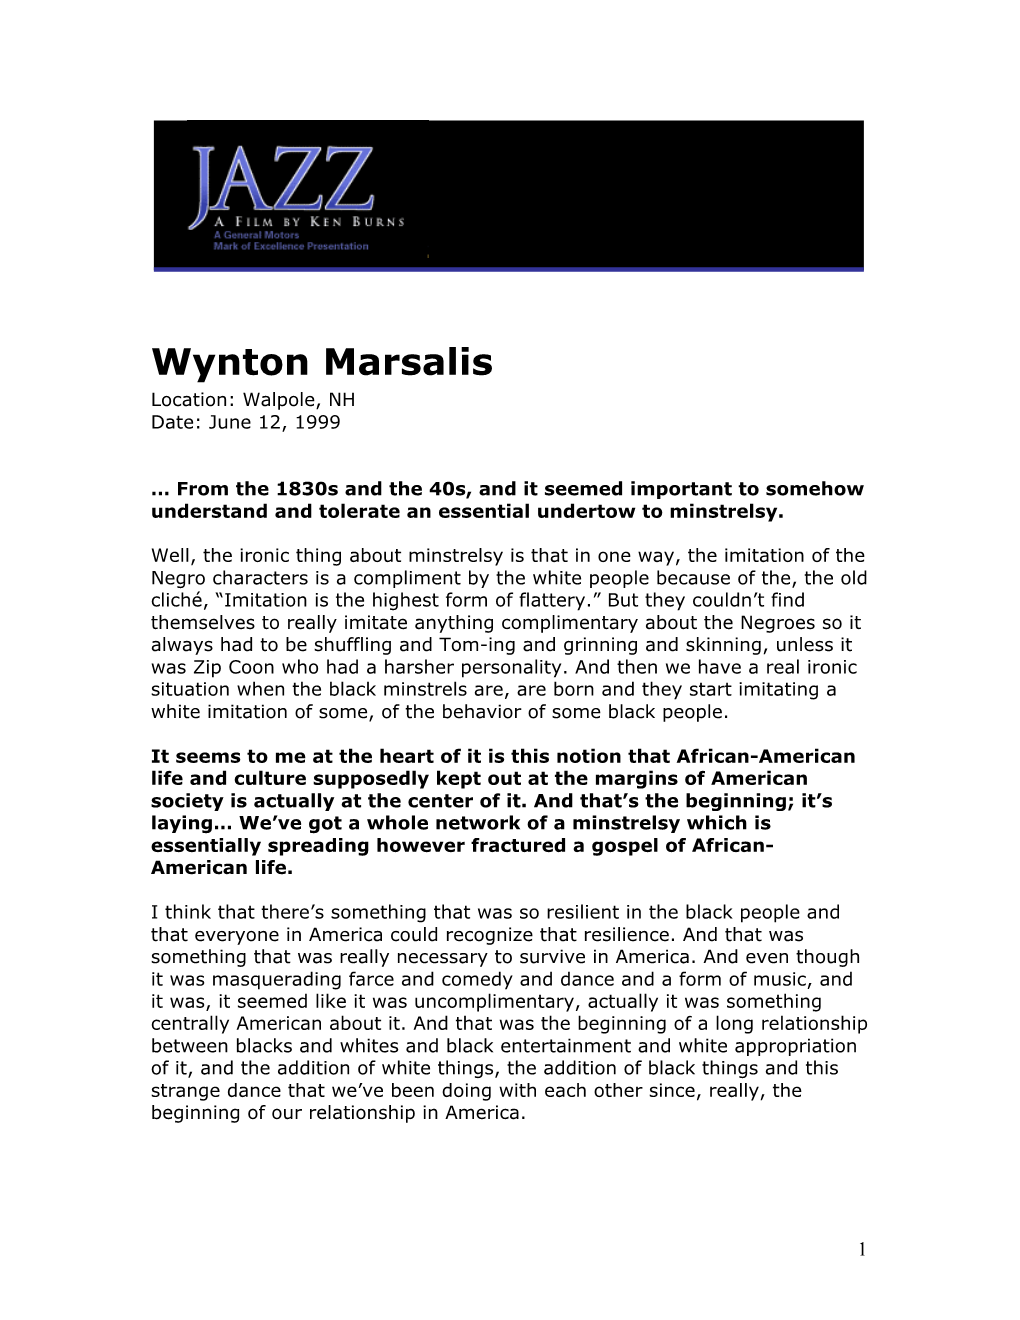 Wynton Marsalis Location: Walpole, NH Date: June 12, 1999